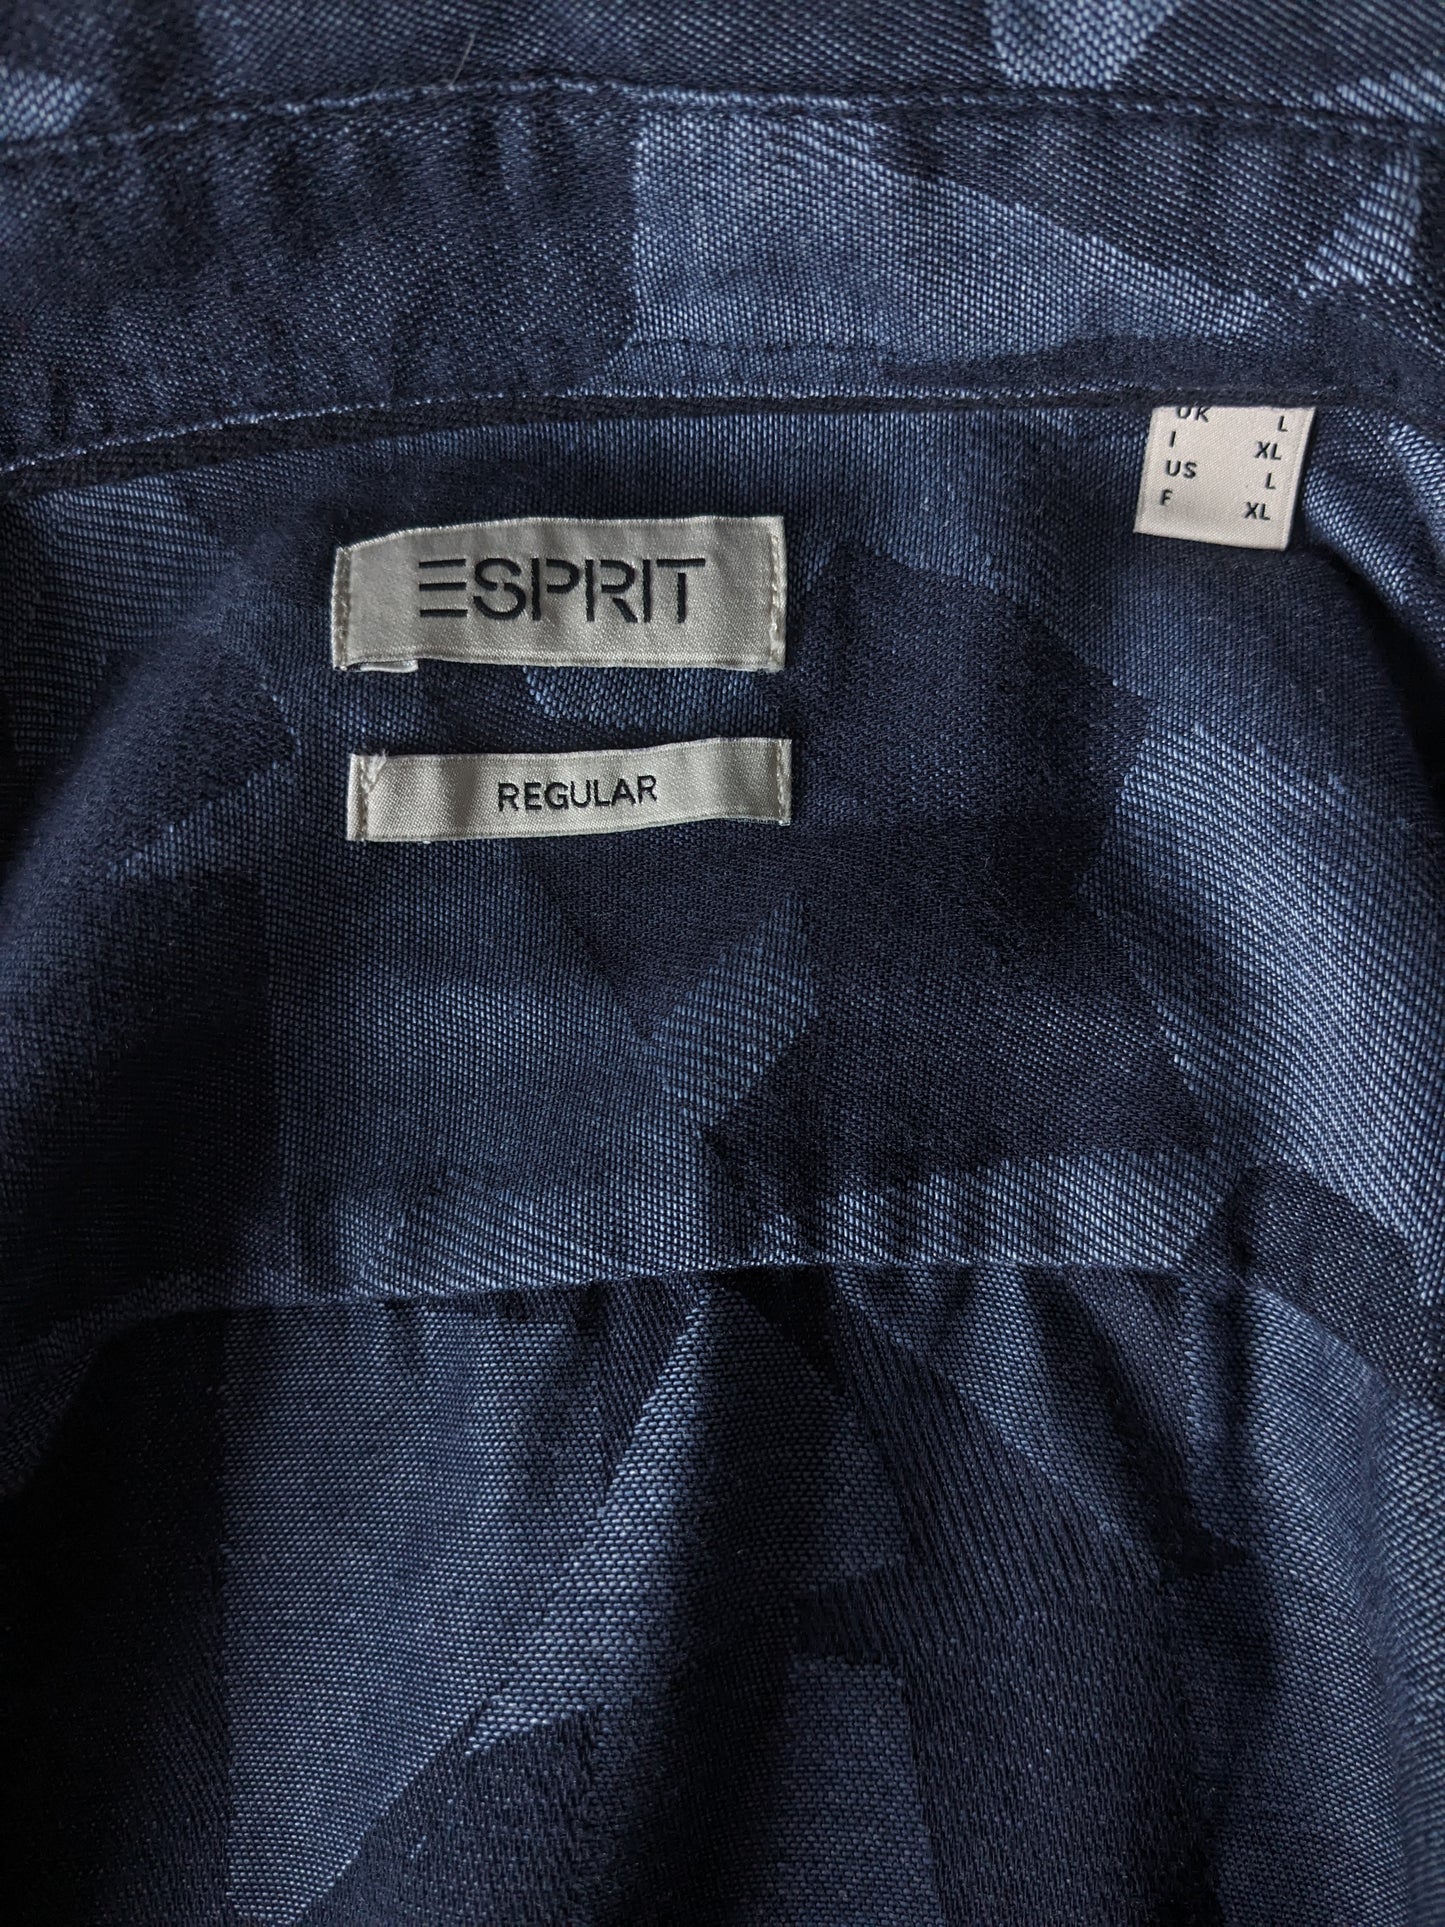 Esprit overhemd. Blauwe print. Maat L. Regular Fit.